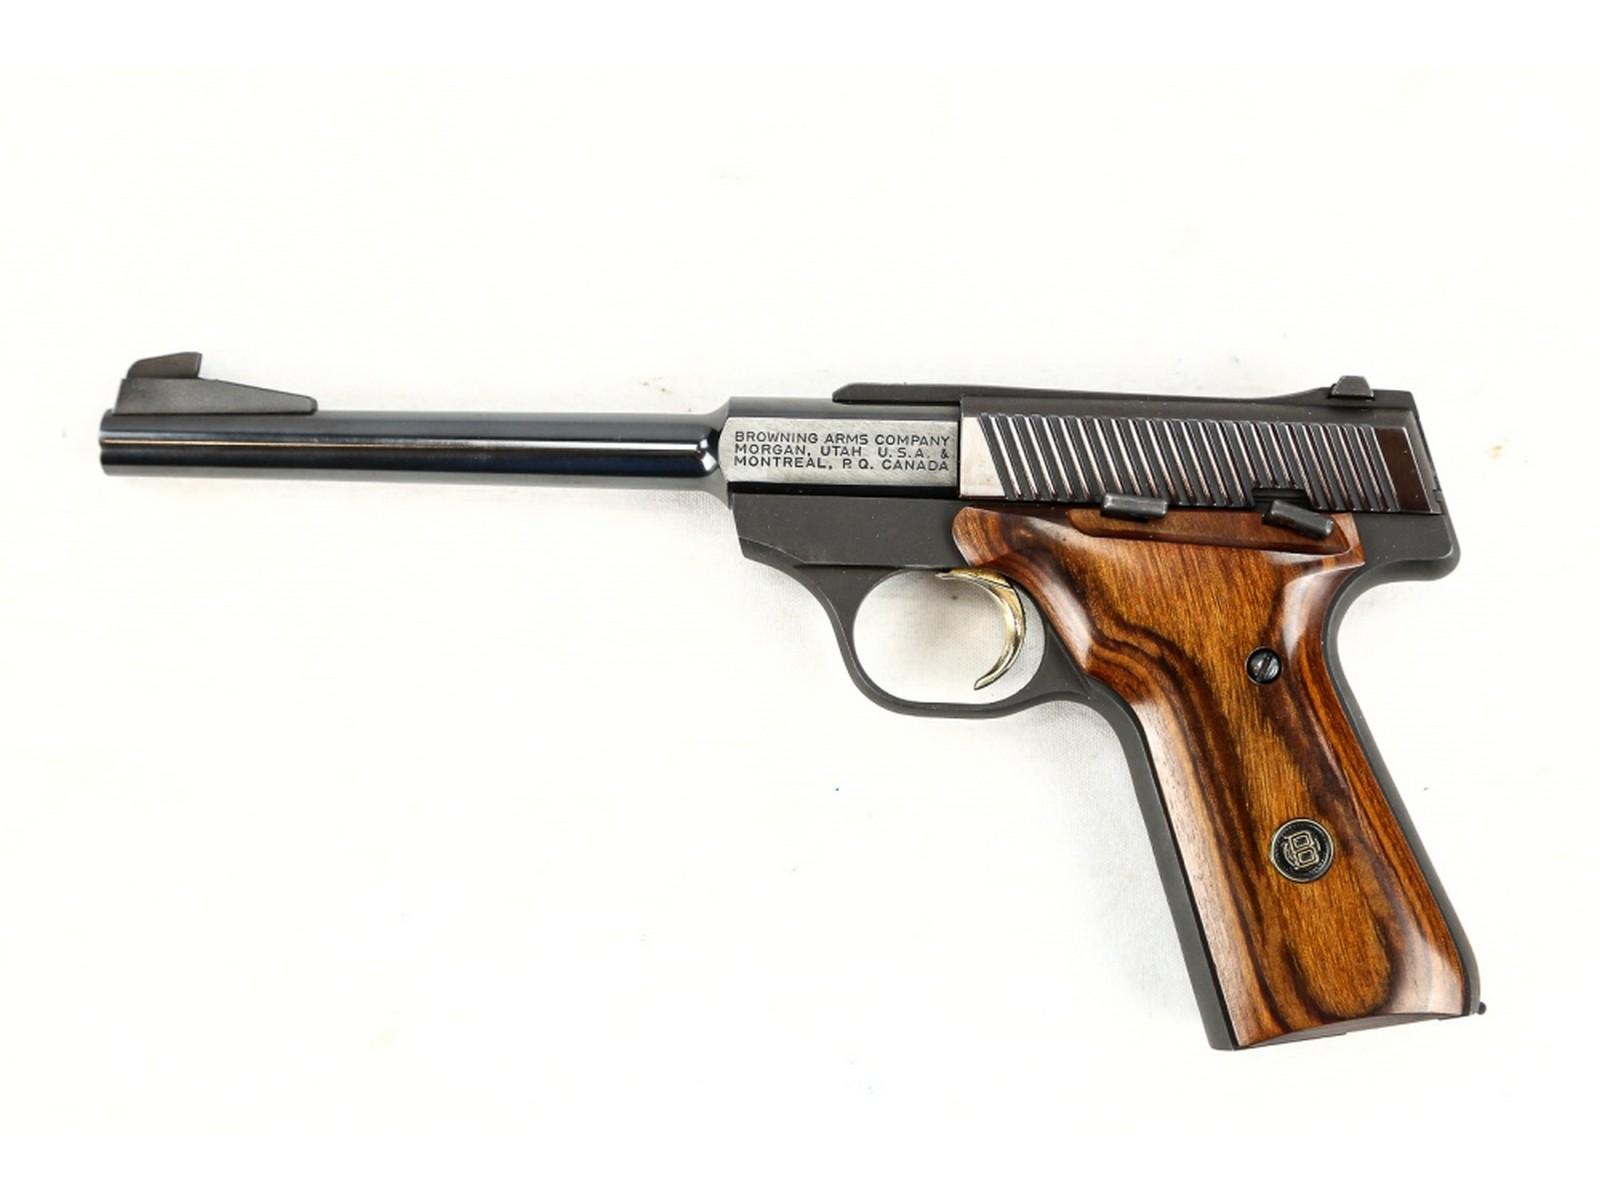 Browning Challenger II Pistol 22 Caliber